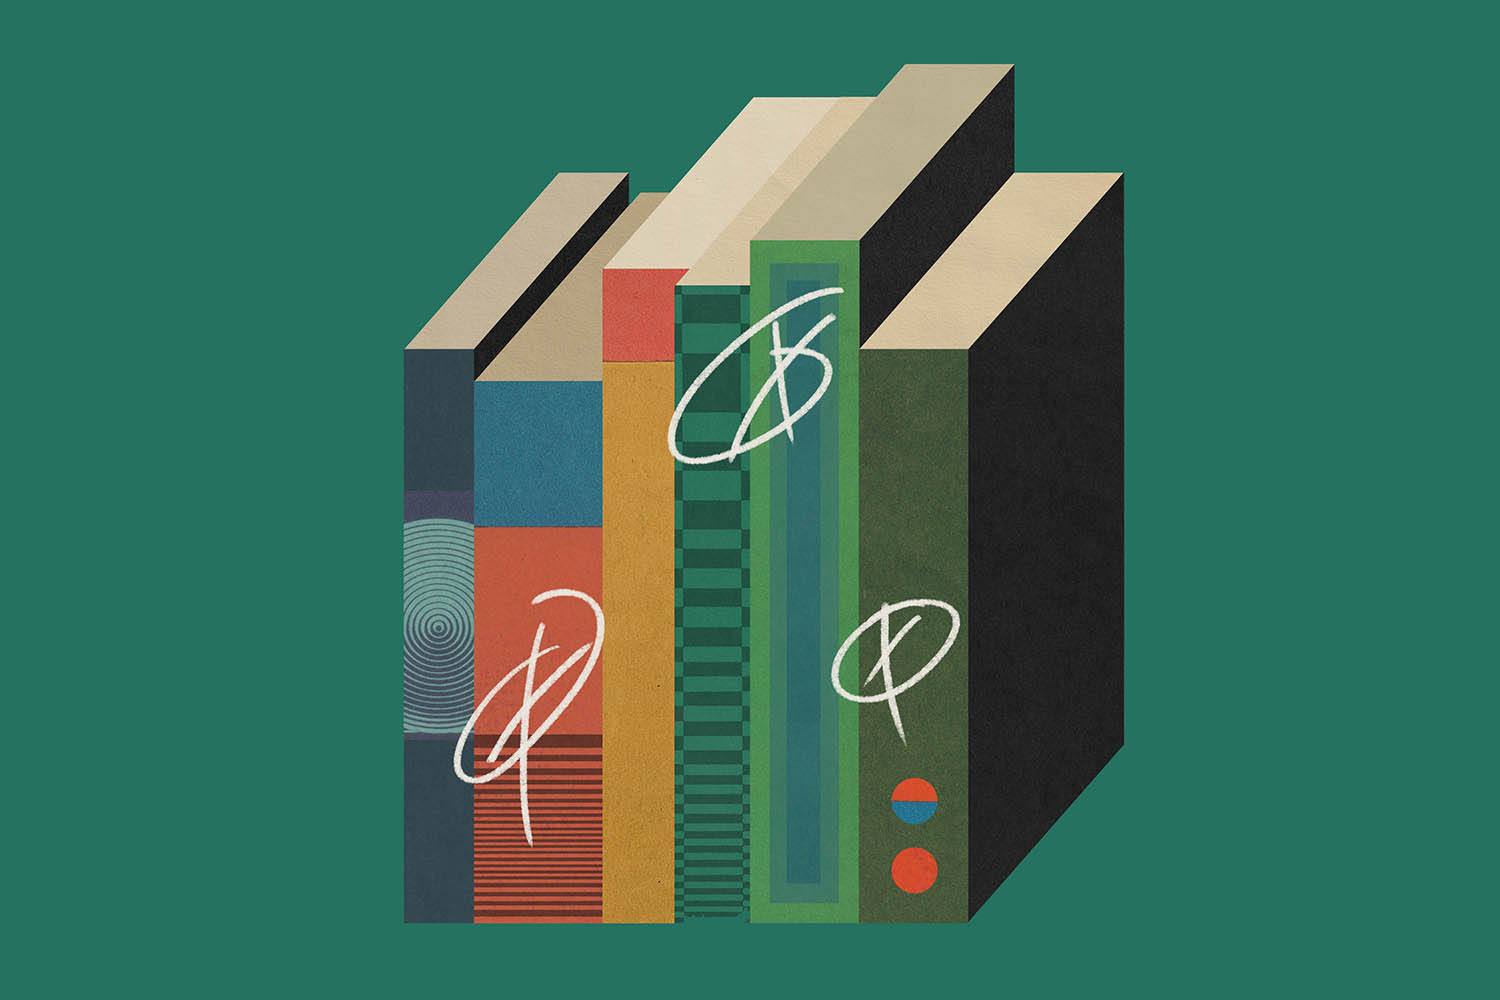 Illustration of book bindings by Mark Weaver